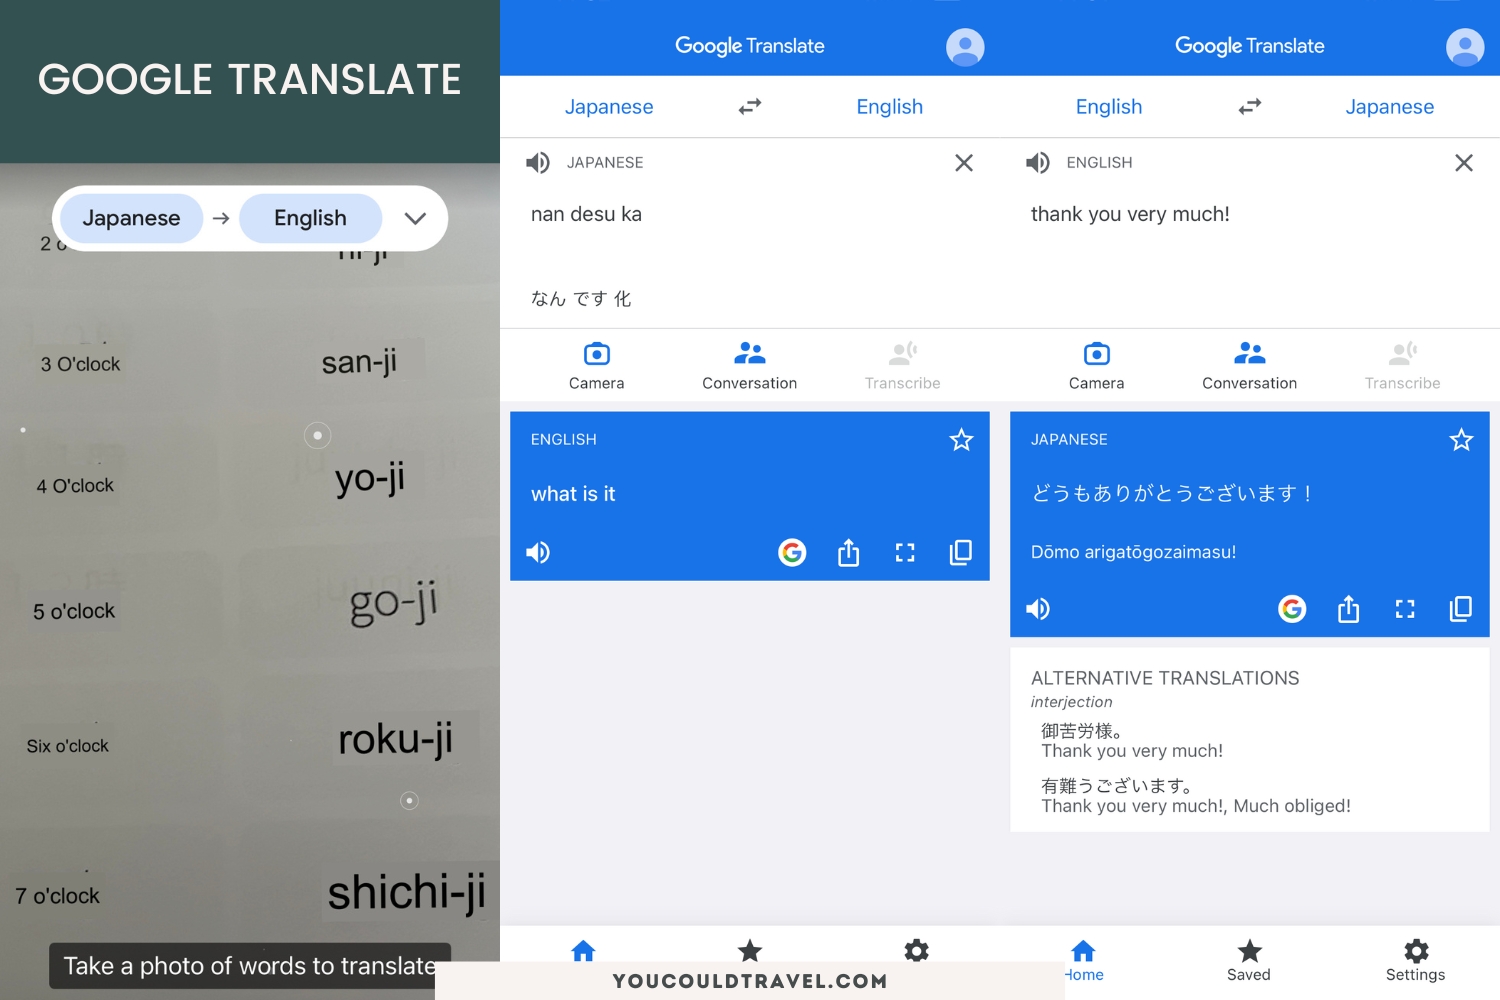 iOS screenshots of Google Translate